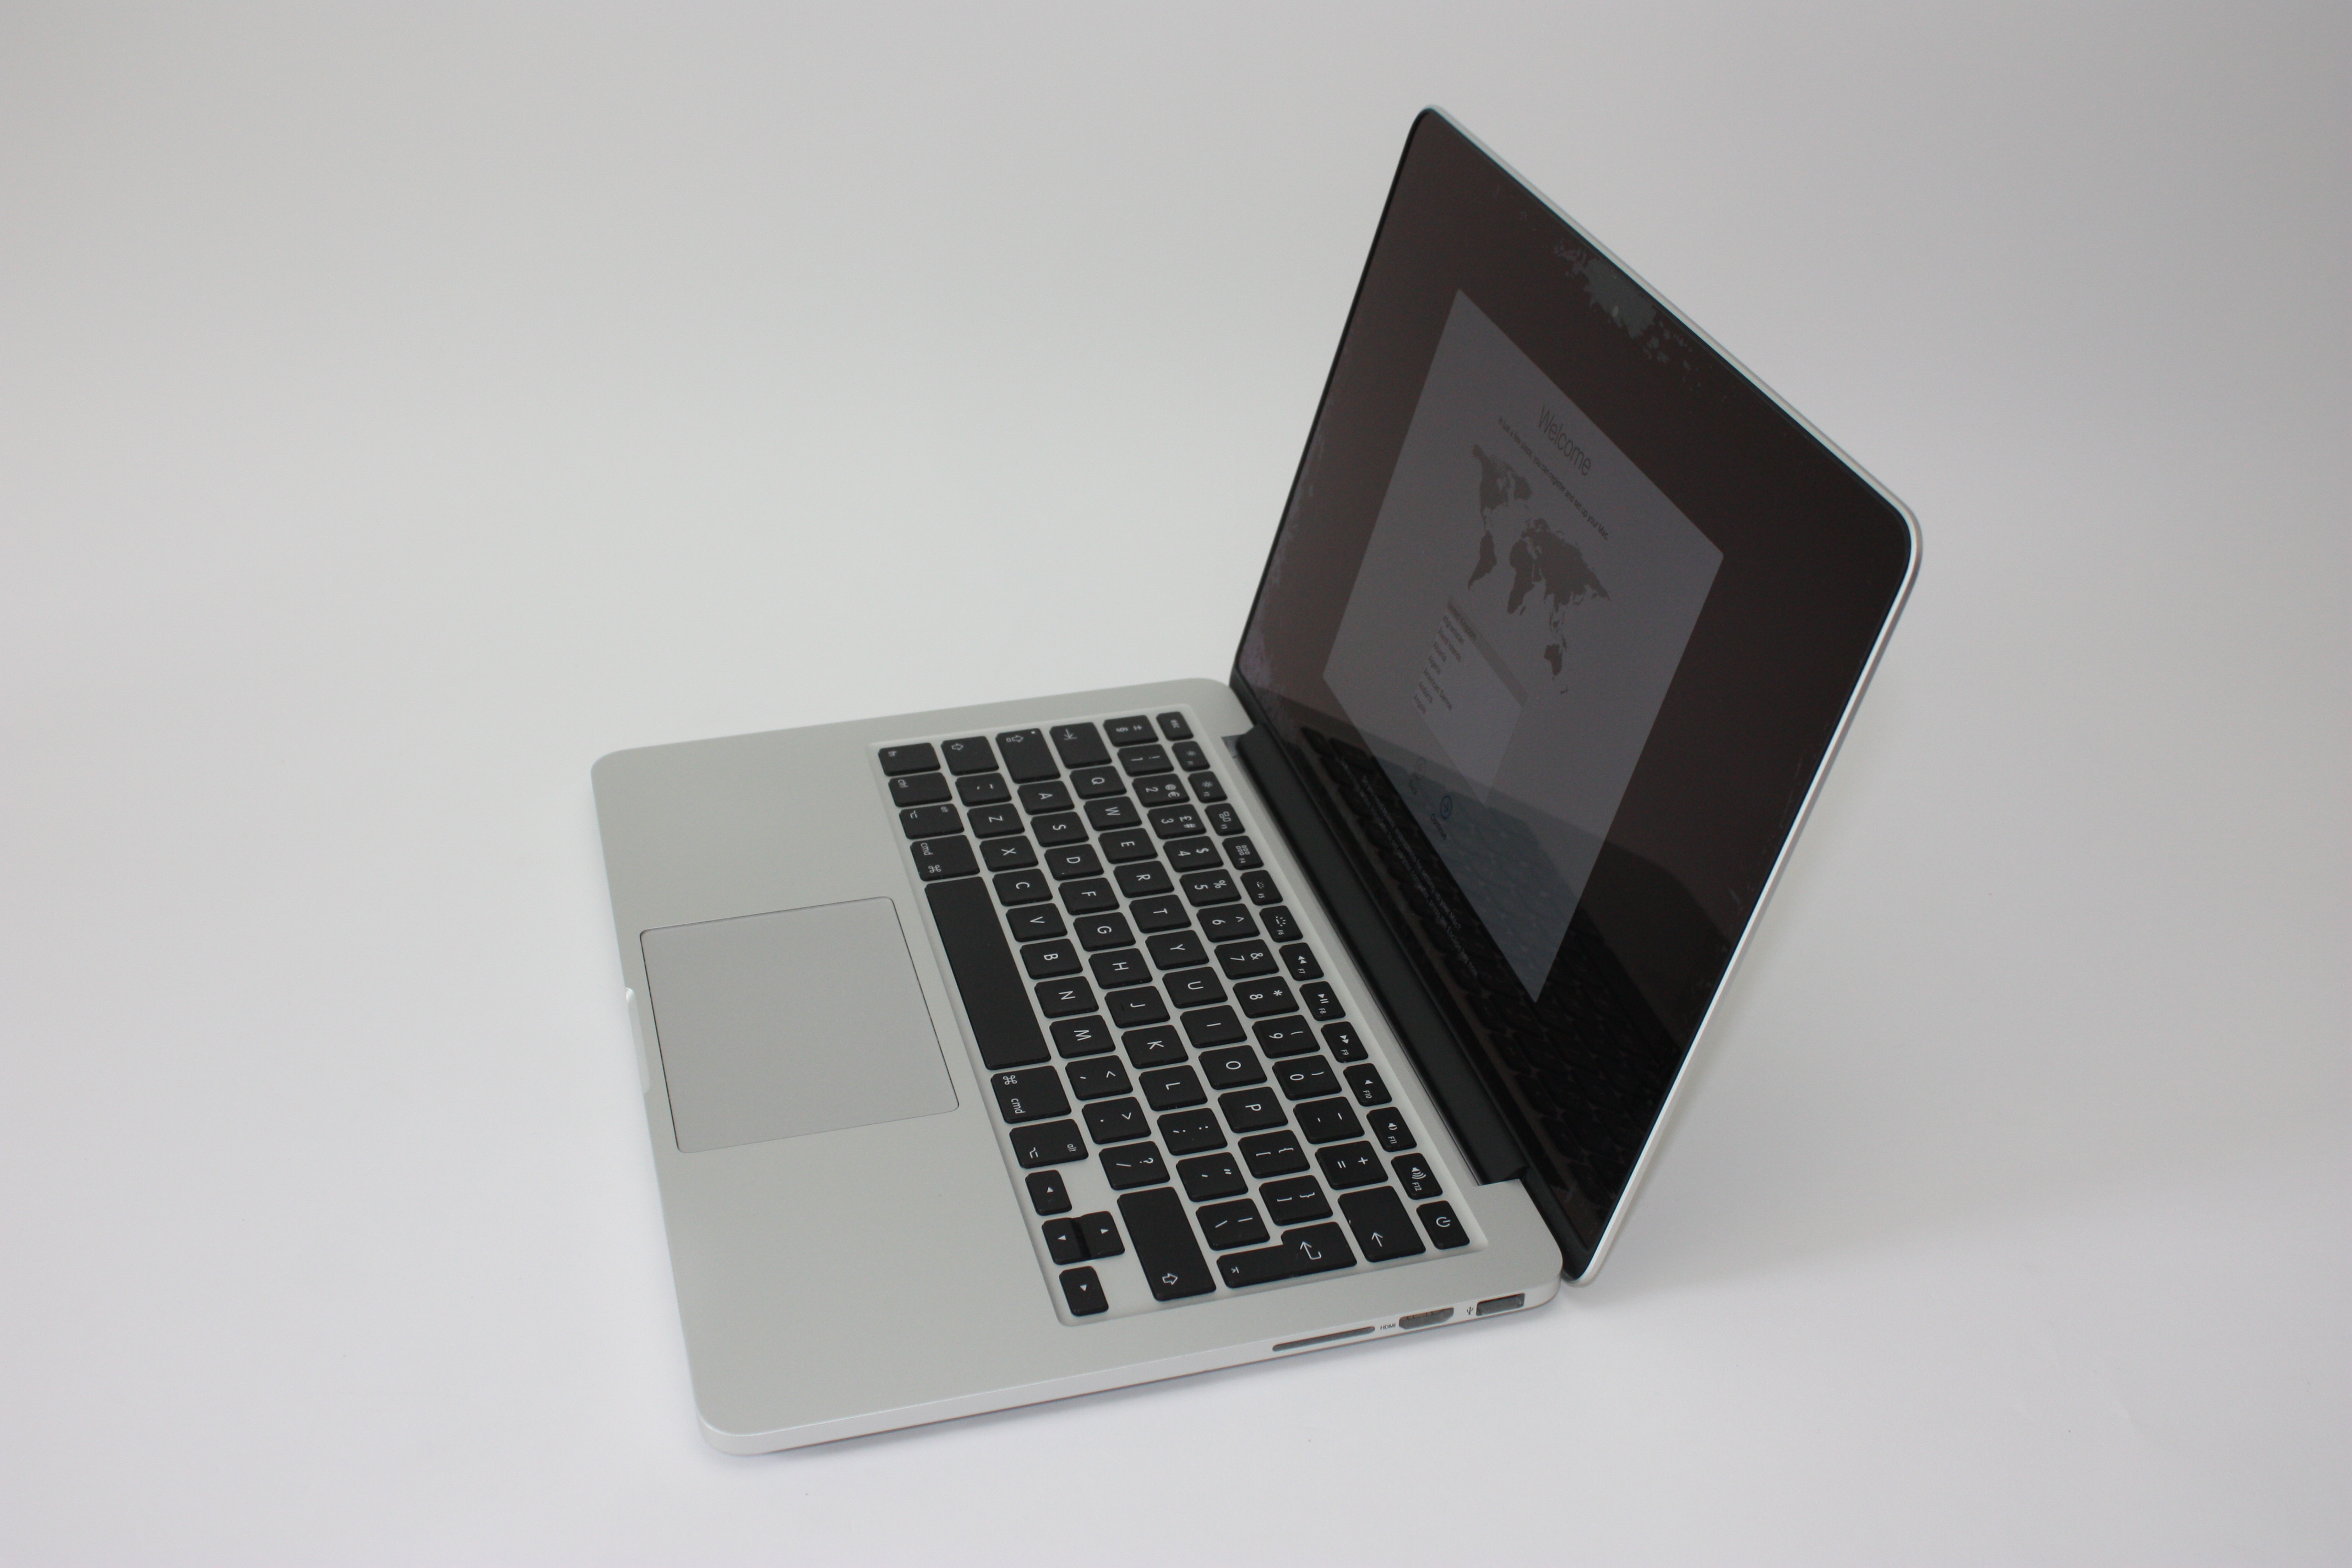 macbook pro retina 13 inch early 2015